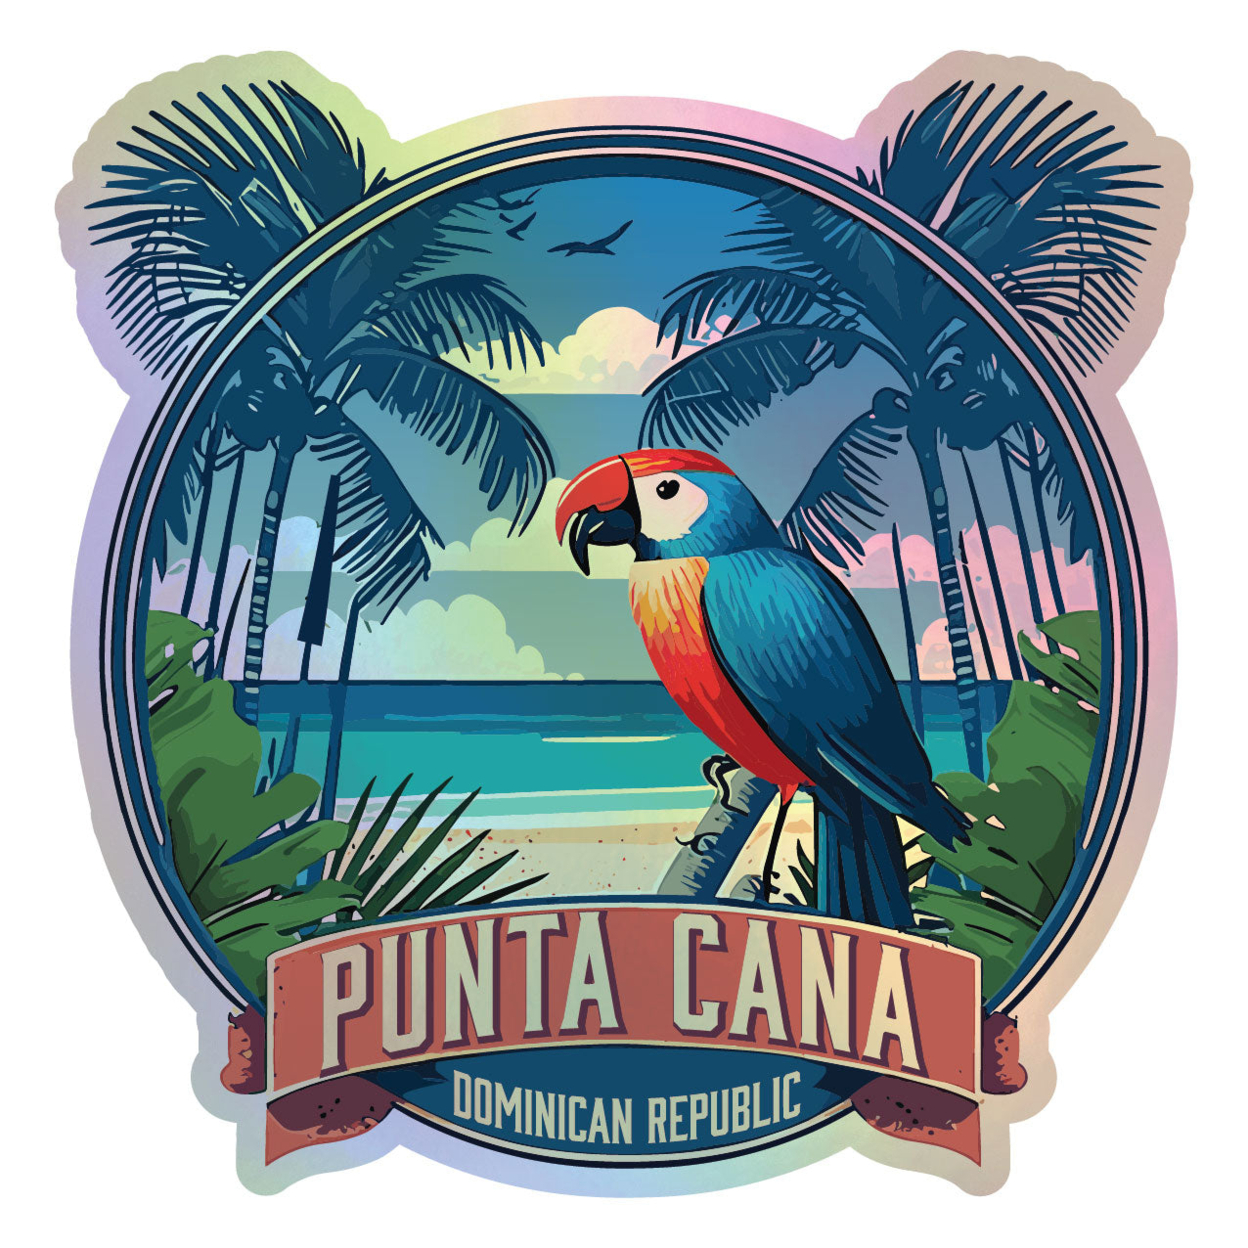 Punta Cana Dominican Republic Holographic Souvenir Vinyl Decal Sticker Parrot Design - 12 Inch